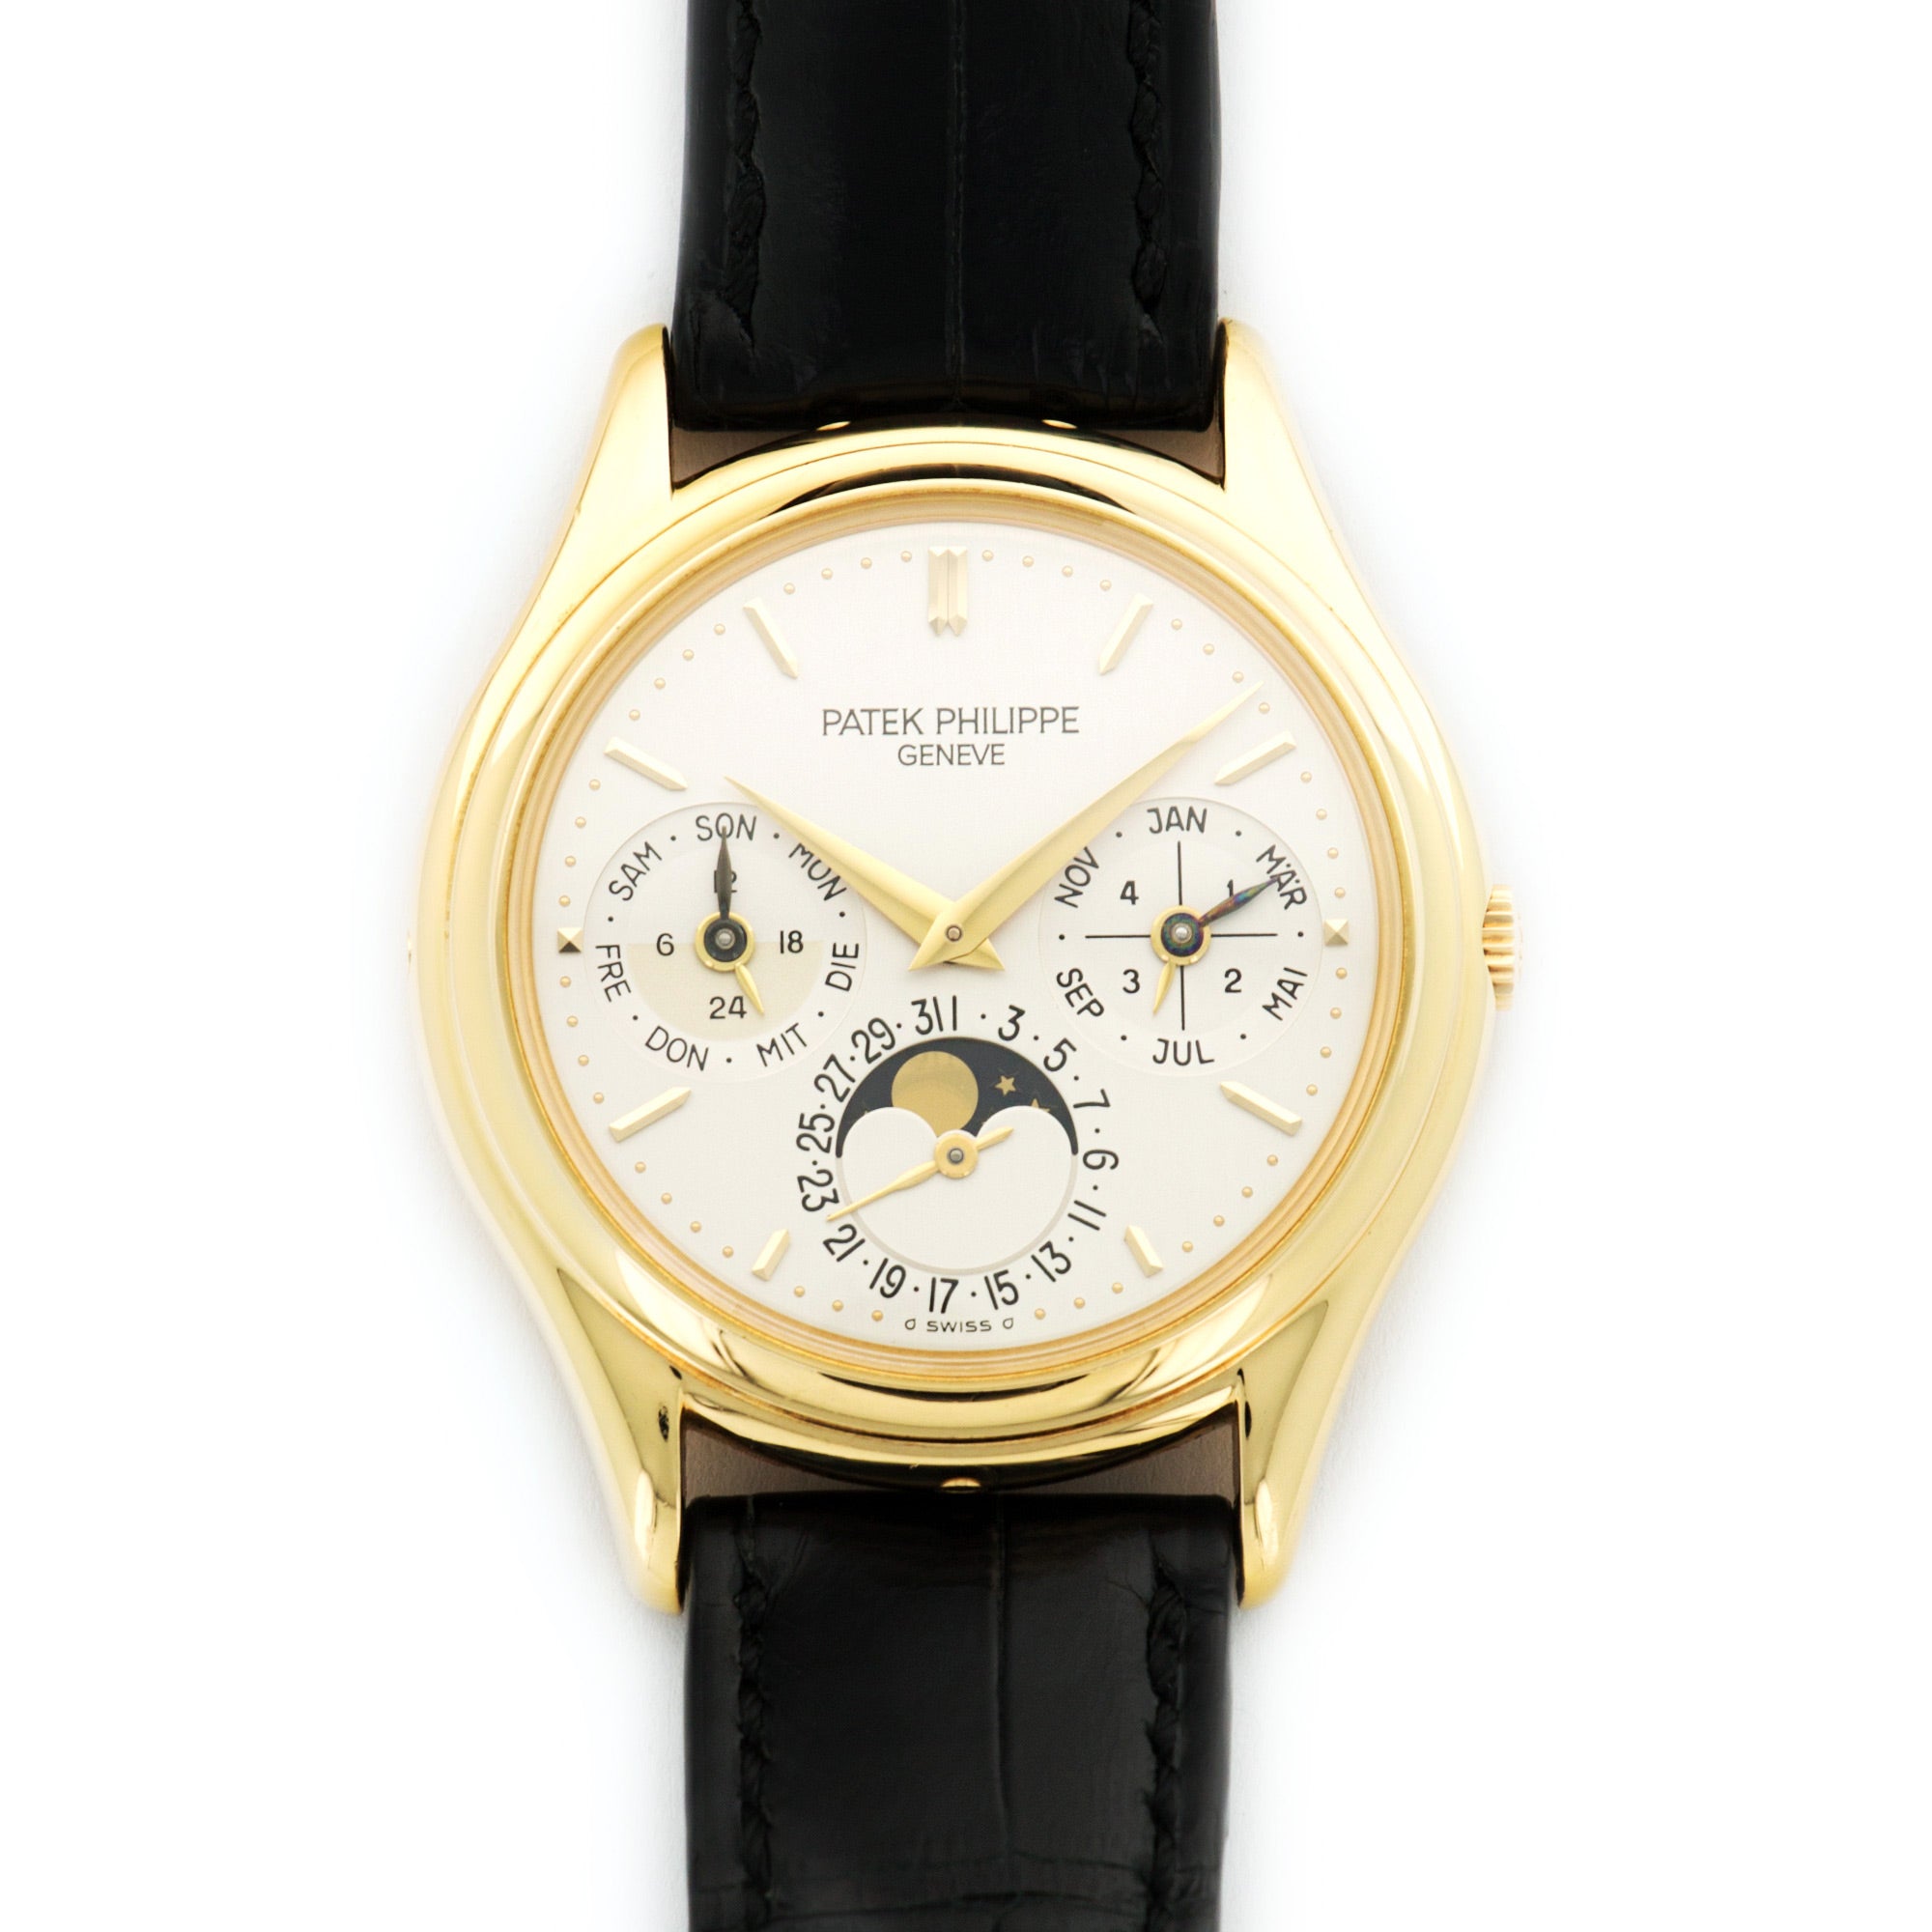 Patek Philippe - Patek Philippe Yellow Gold Perpetual Calendar Watch Ref. 3940J - The Keystone Watches